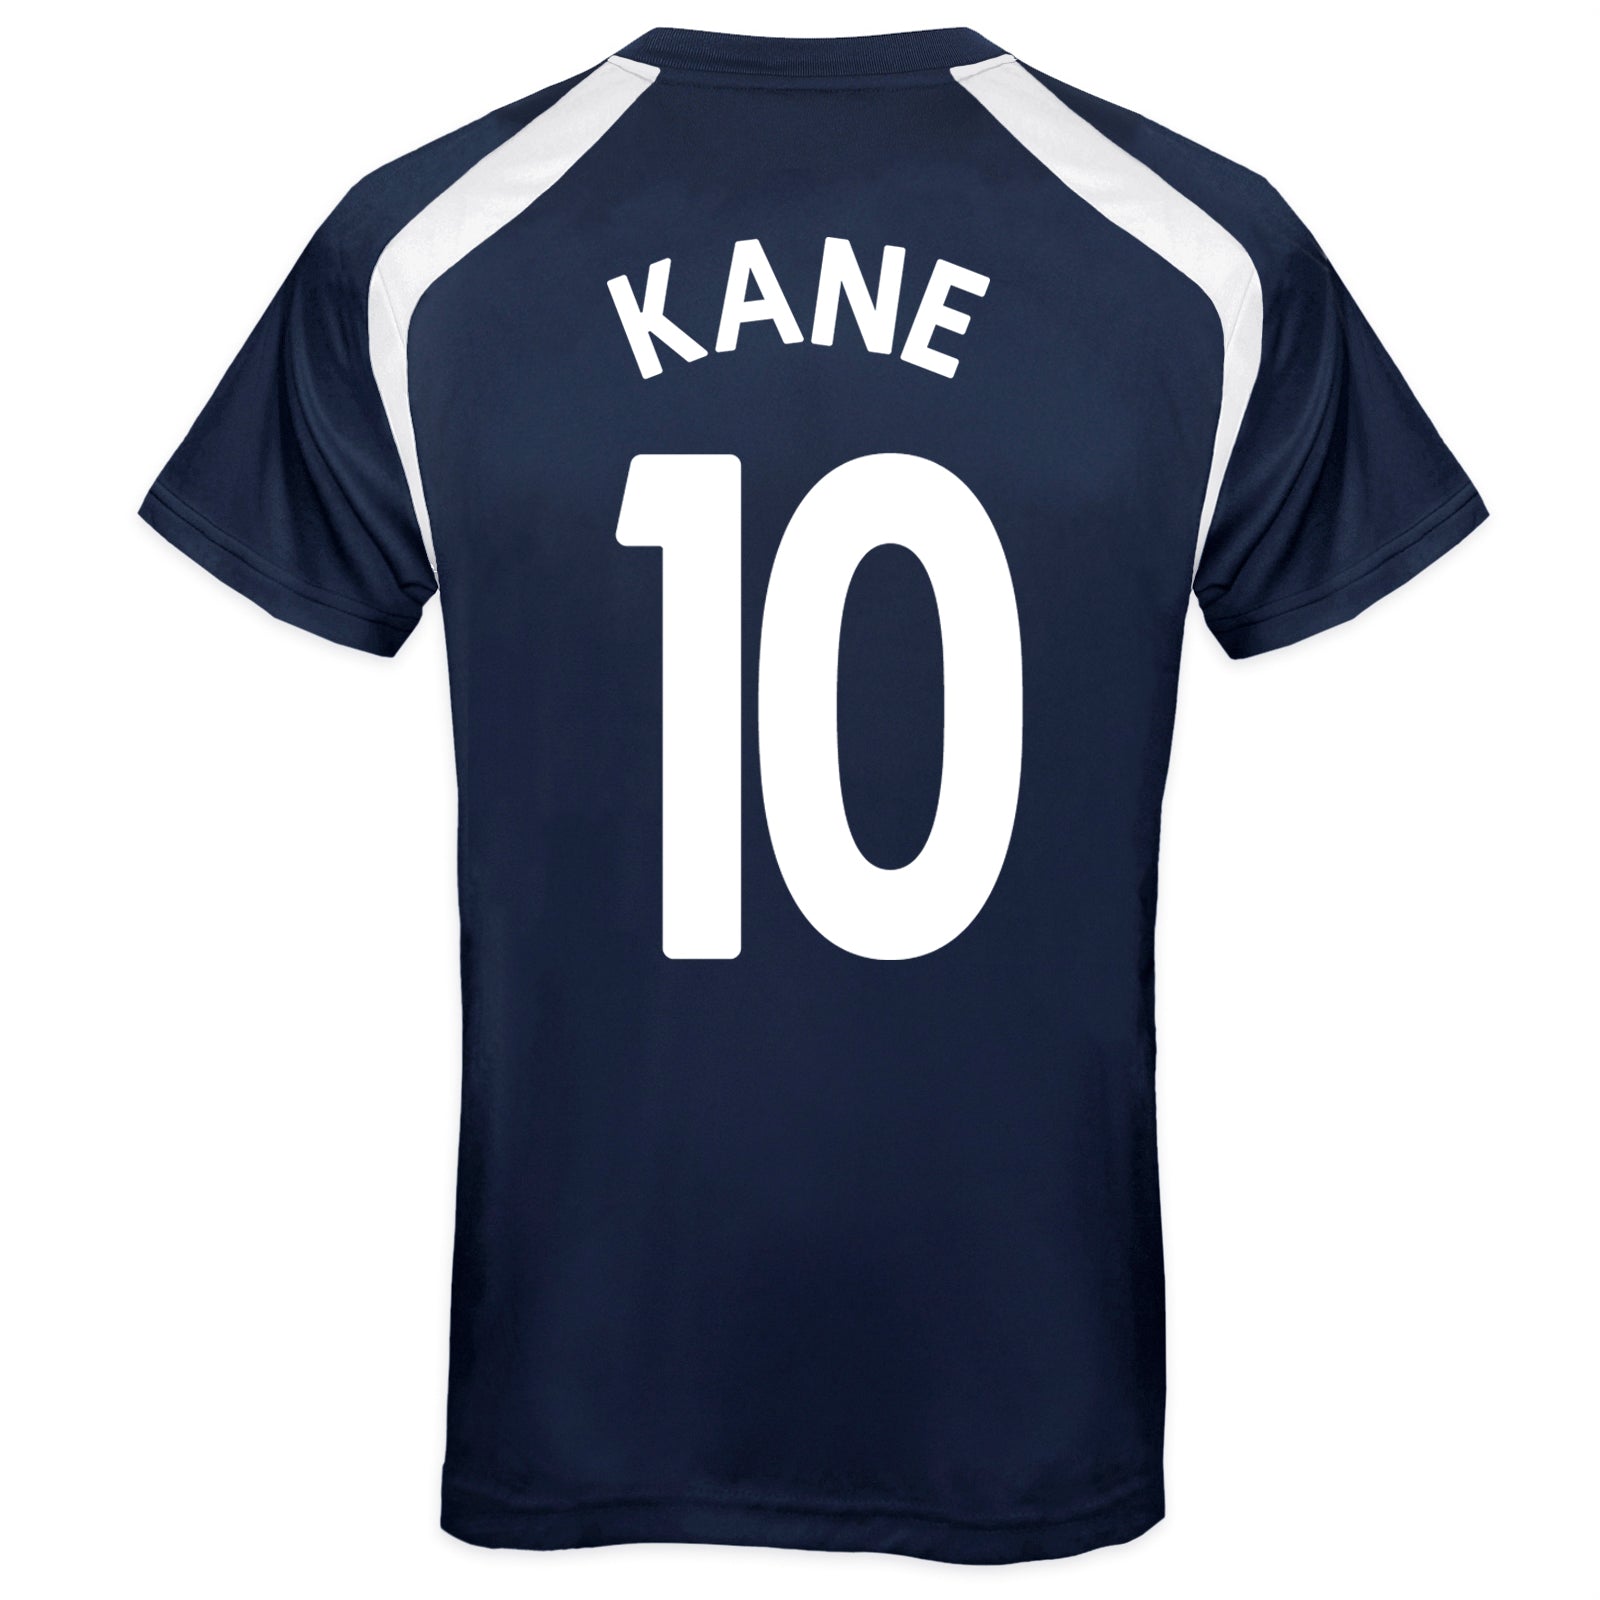 Navy Kane 10